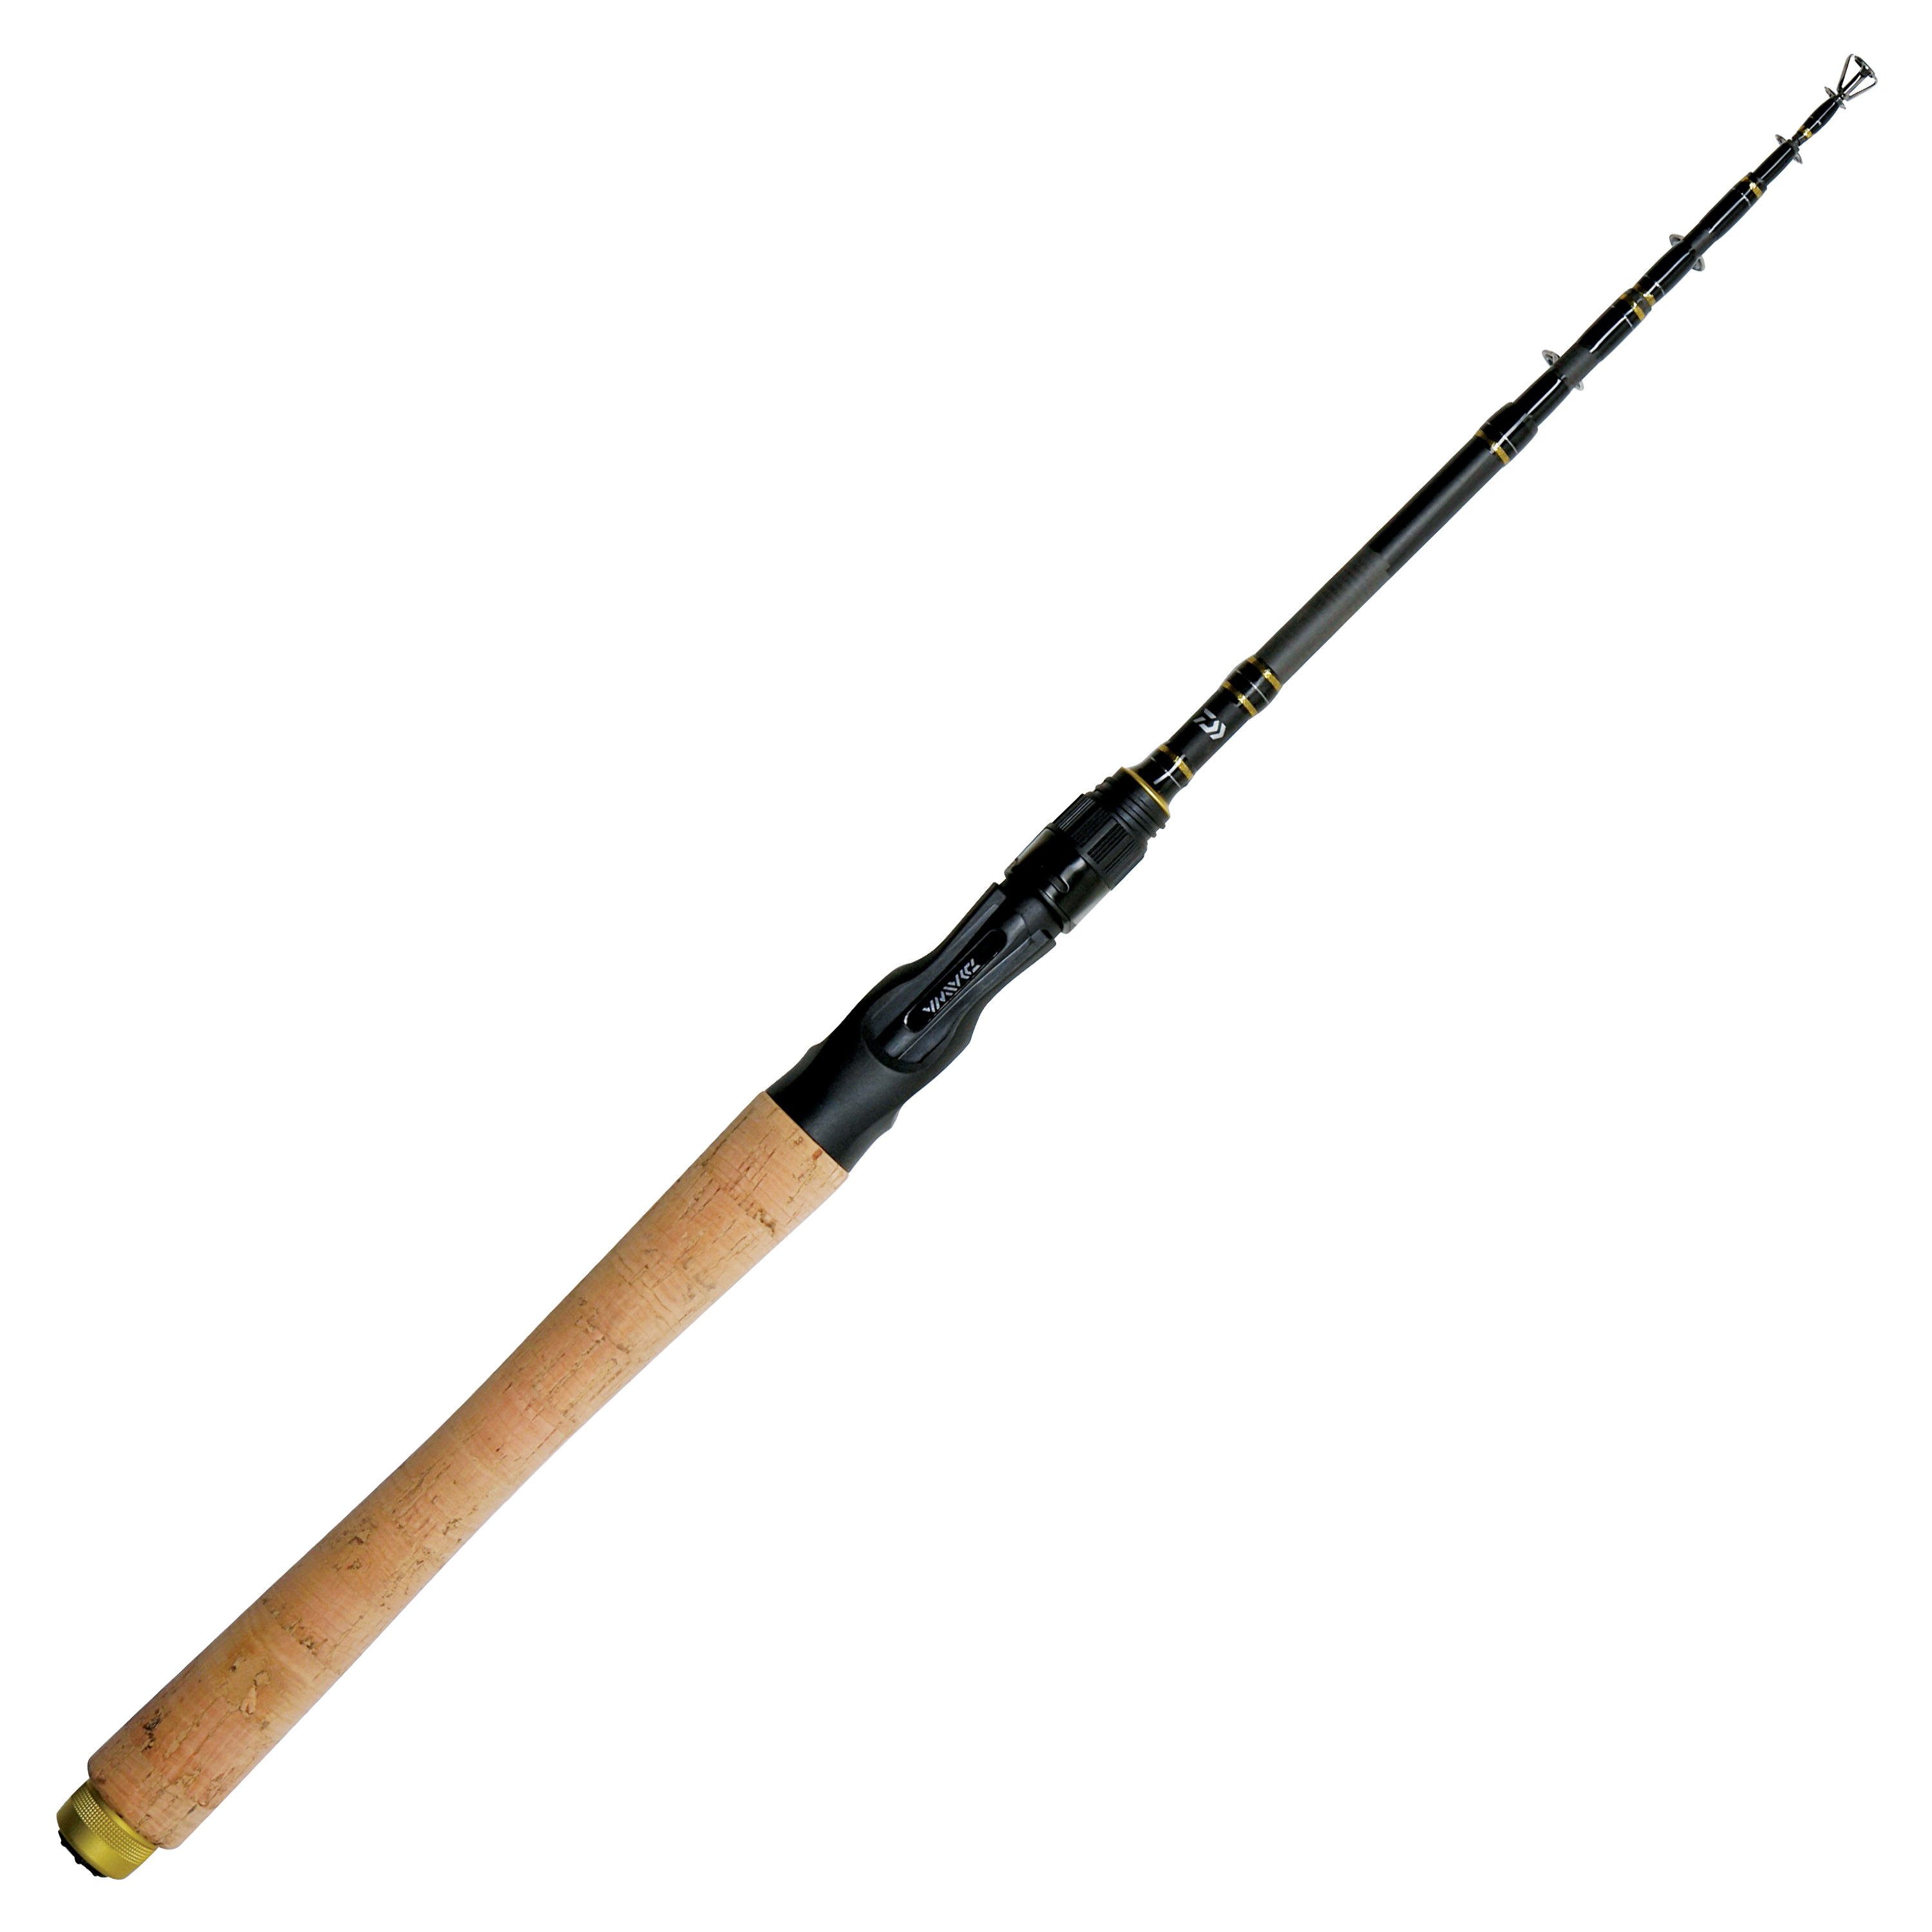  Daiwa Goldcast Spincast Reel, GC120 : Spincasting Fishing Reels  : Sports & Outdoors